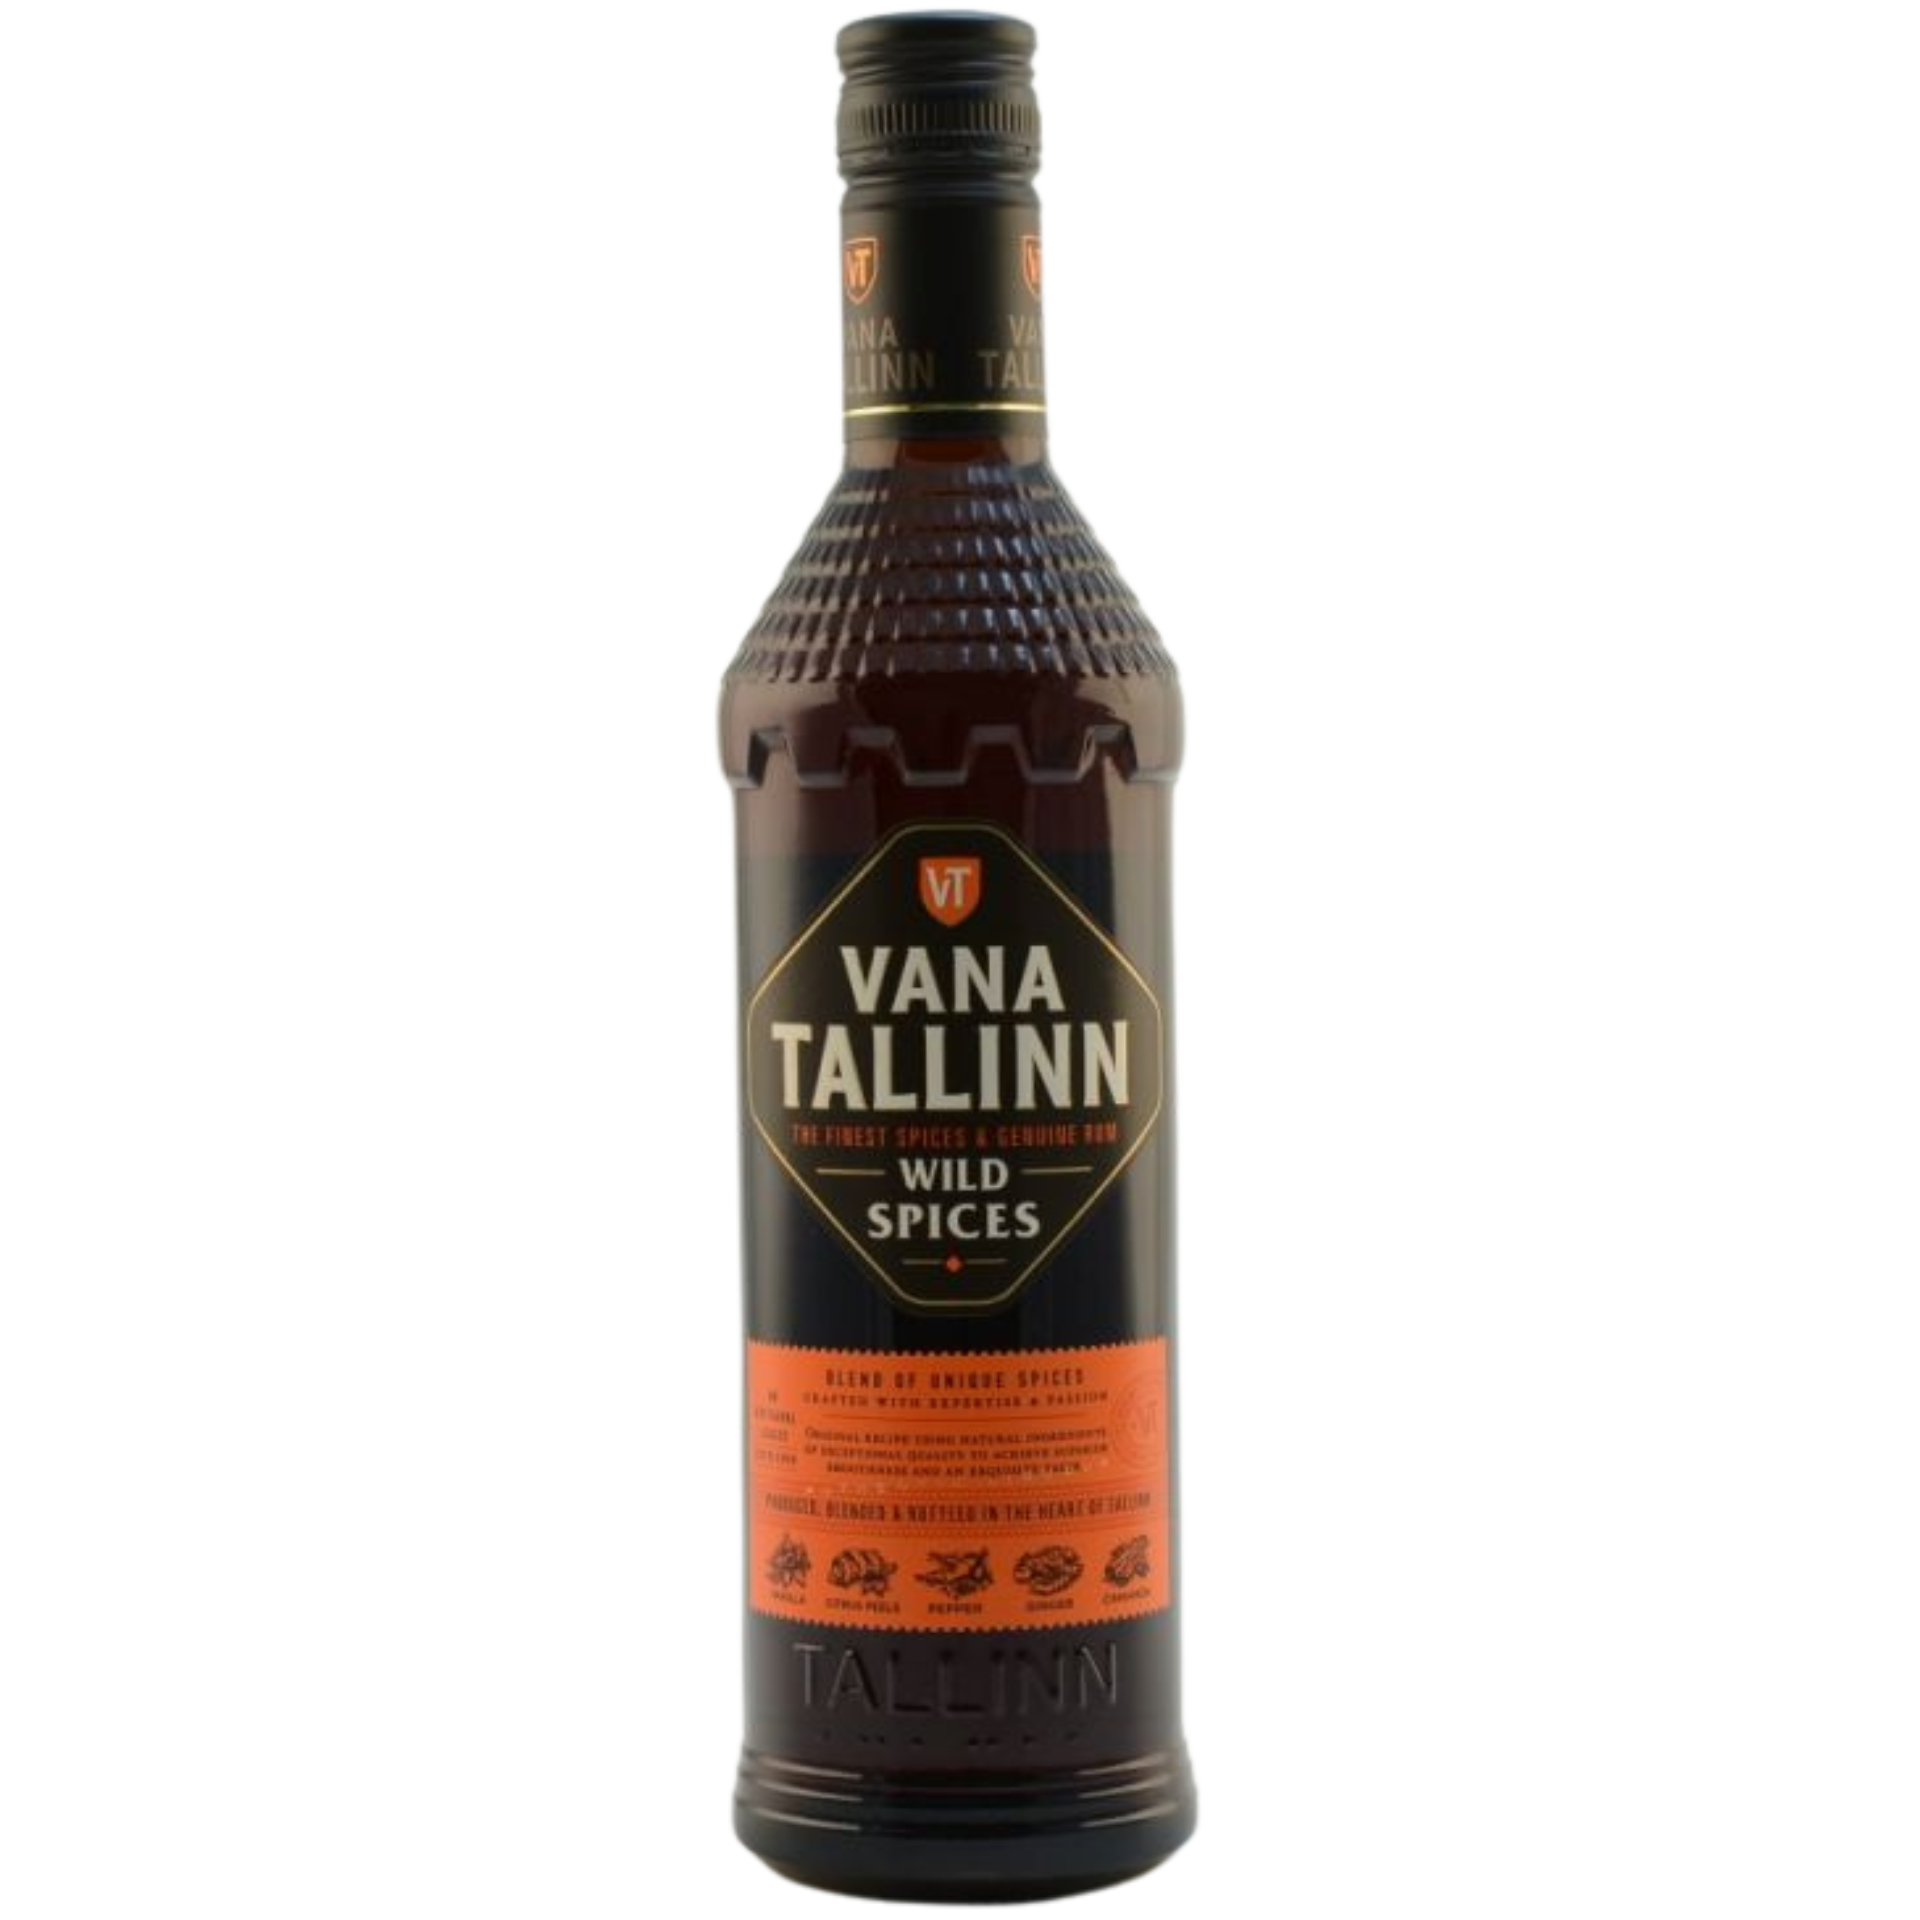 Vana Tallinn Wild Spices 35% 0,5l